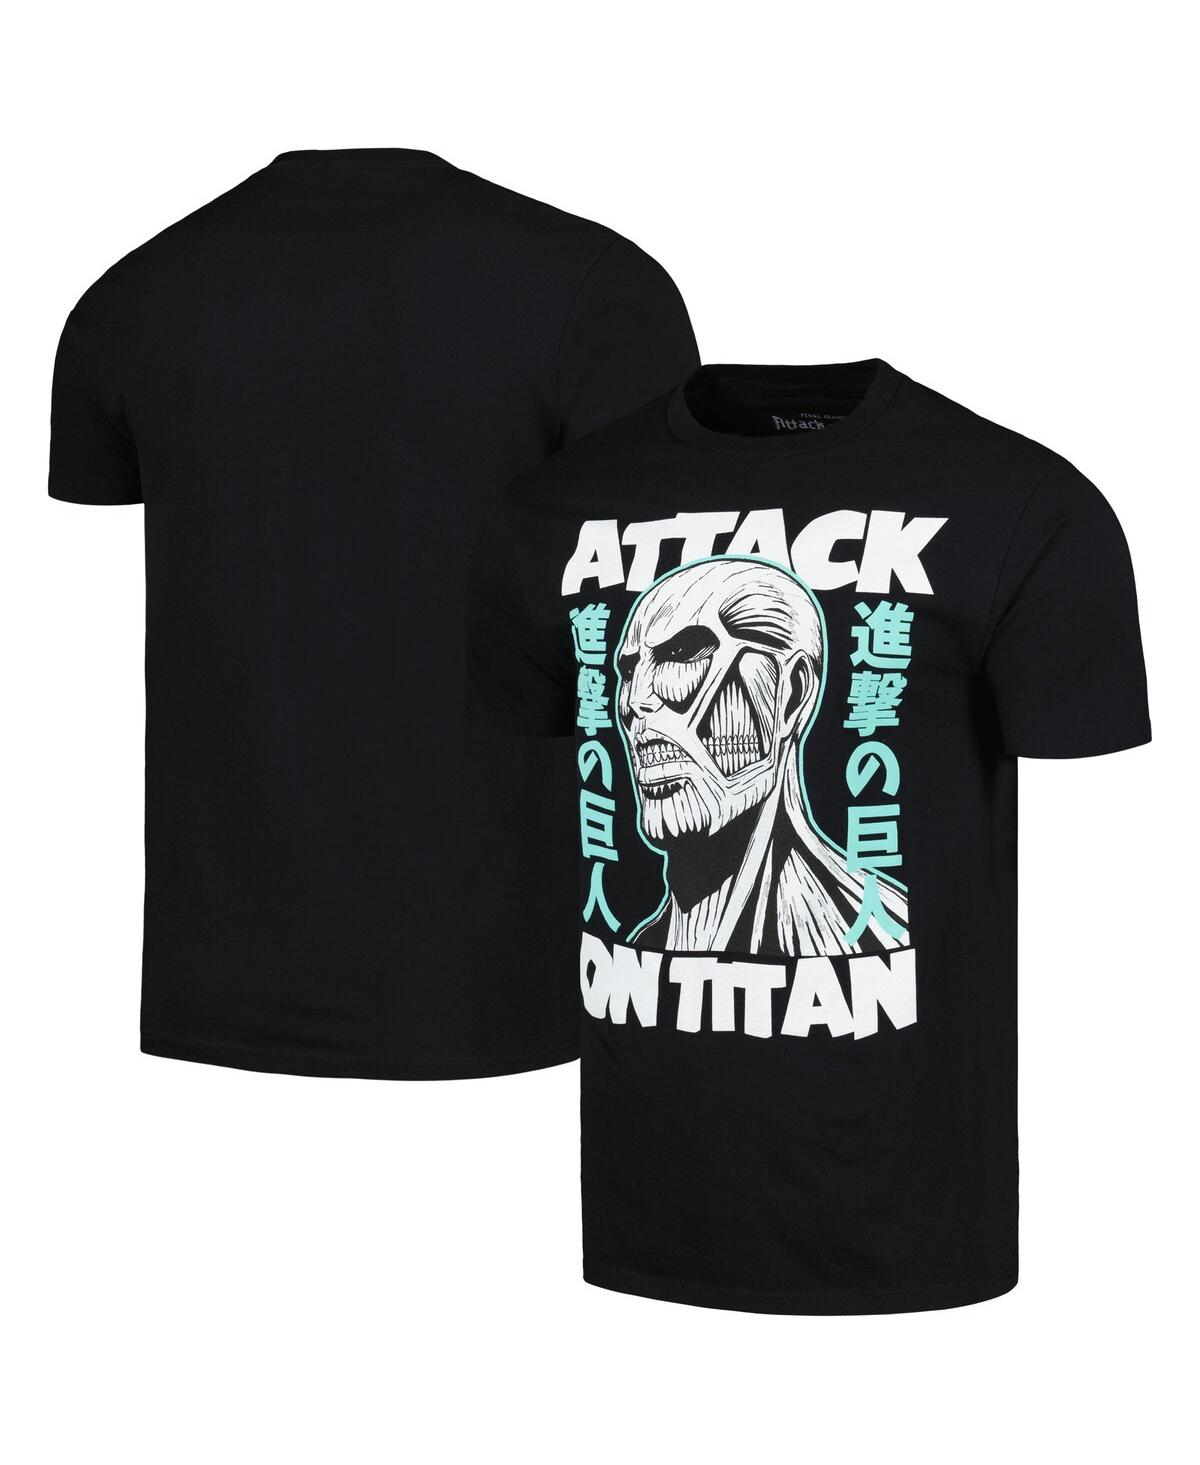 Men's Black Attack on Titan Graphic T-Shirt - Black